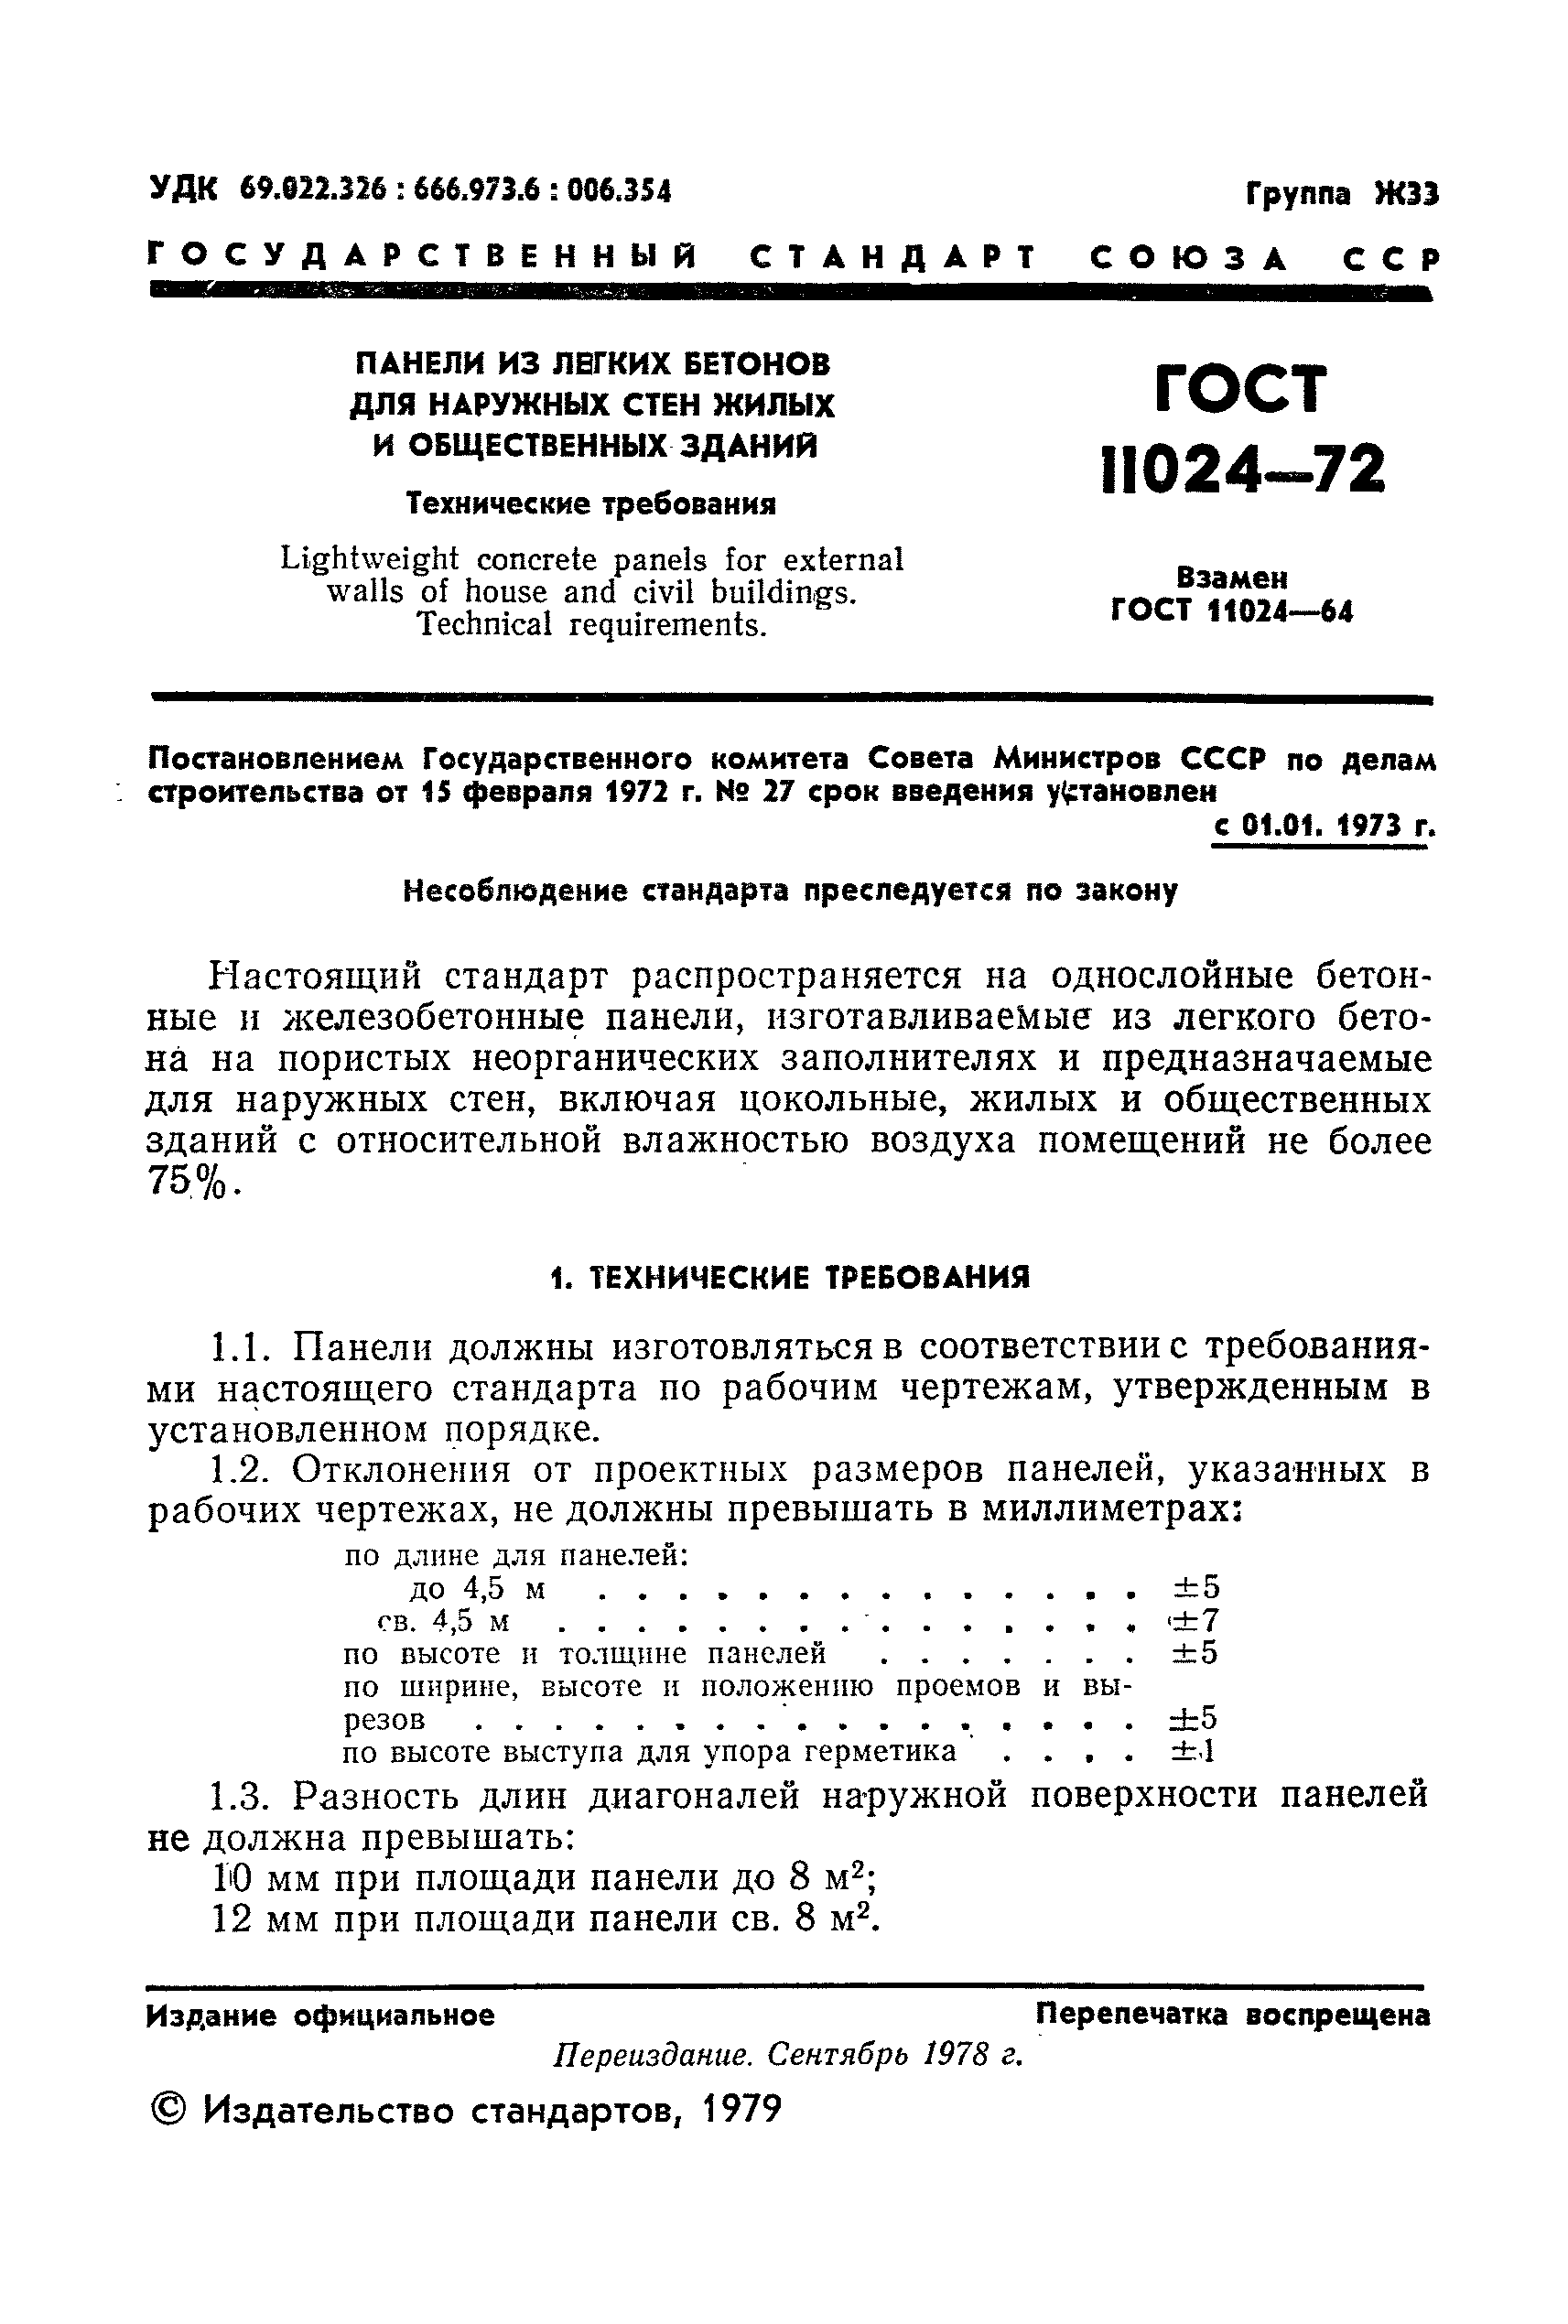 ГОСТ 11024-72